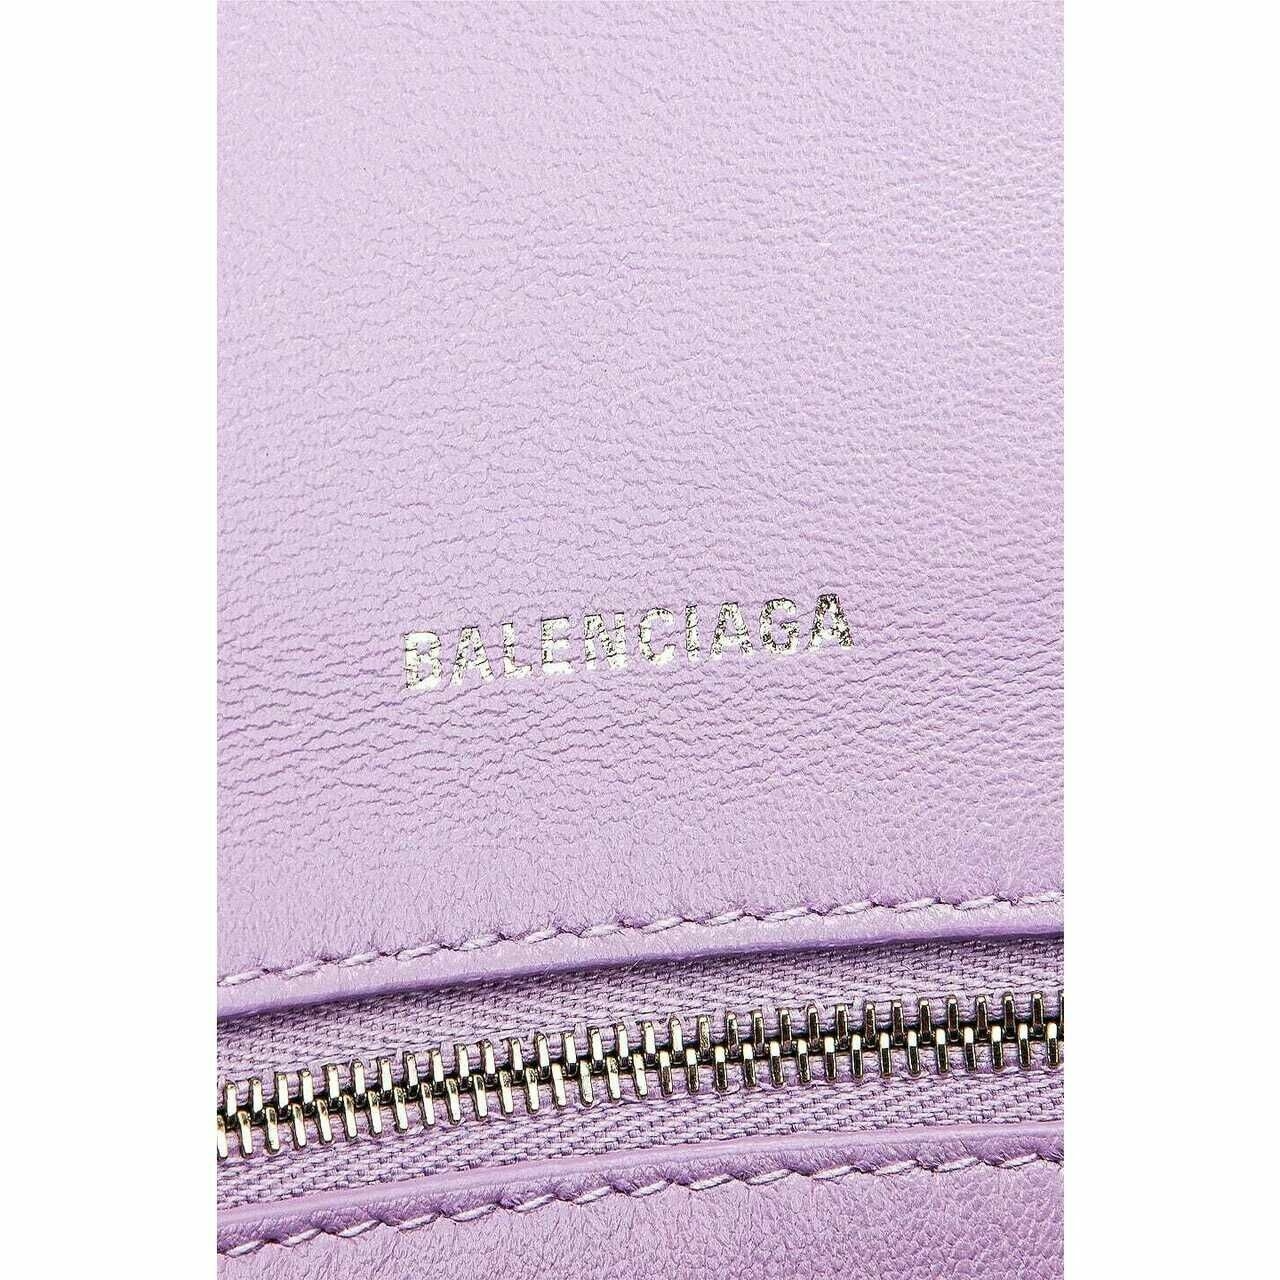 Balenciaga Lilac Shoulder Bag